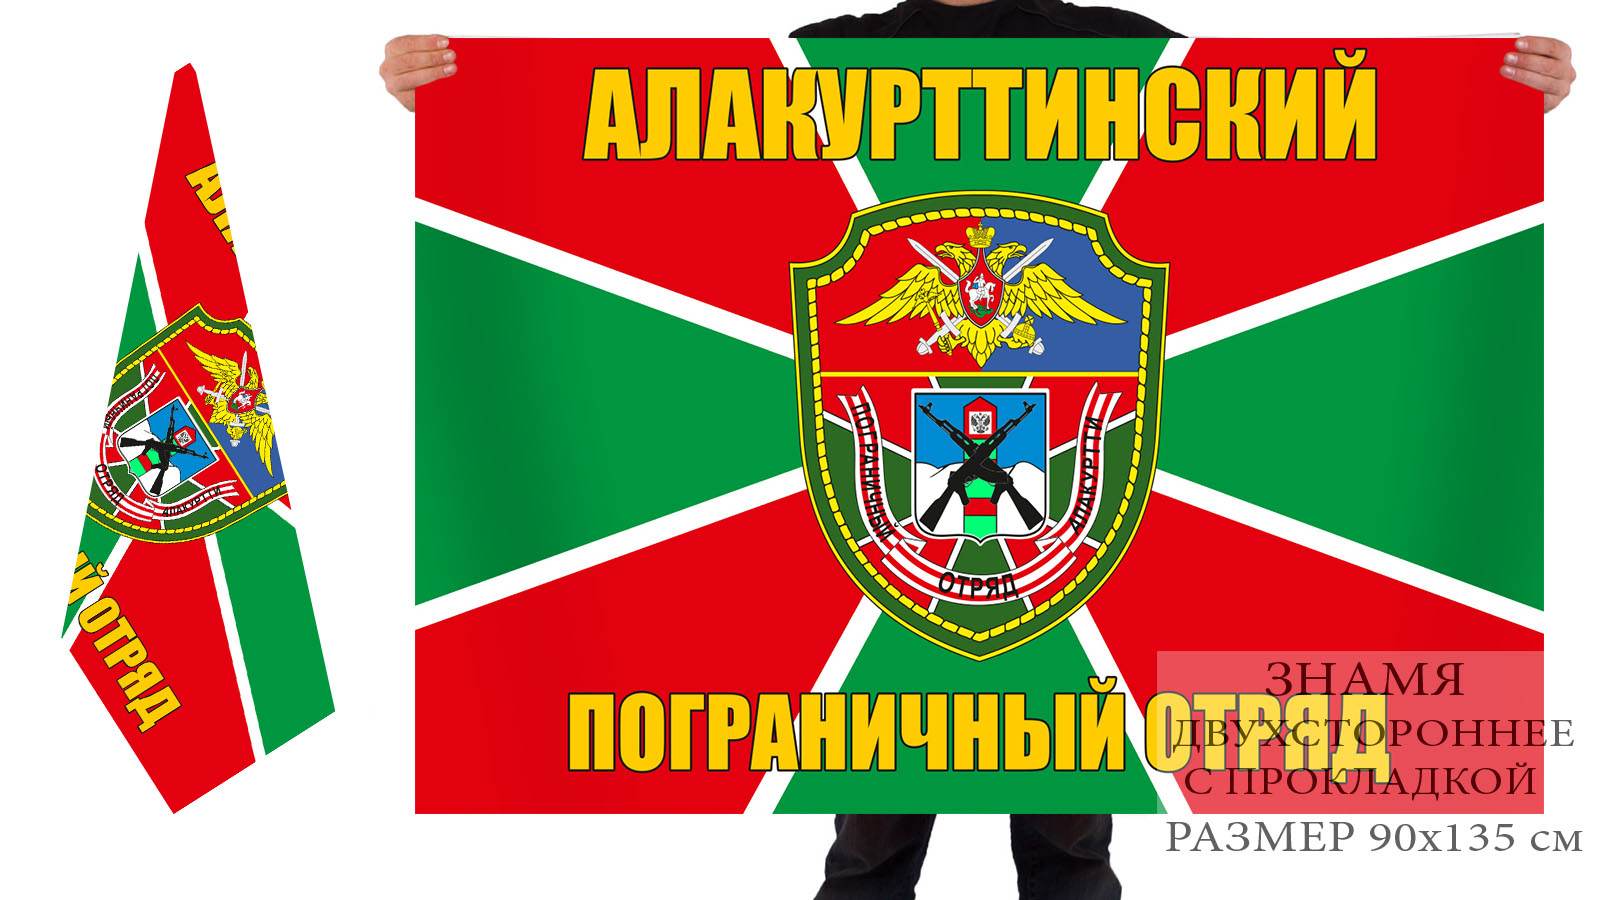 Двусторонний флаг Алакурттинского пограничного отряда